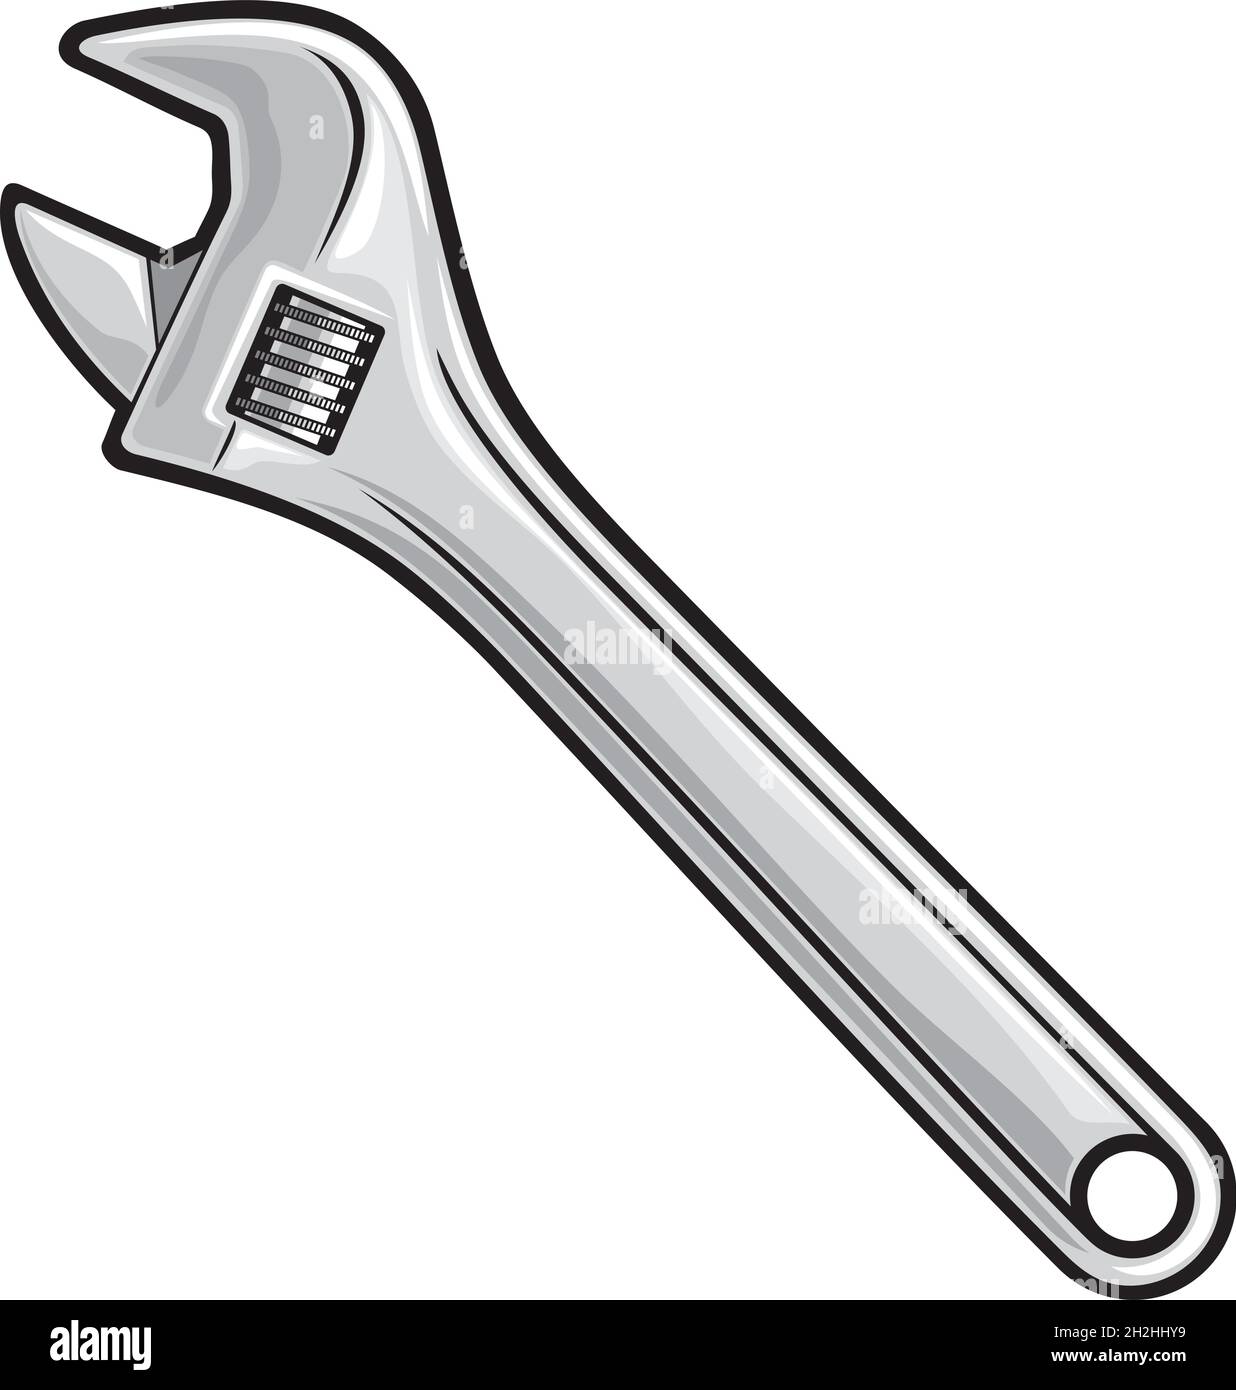 Adjustable monkey wrench. vector illustration Stock Vector